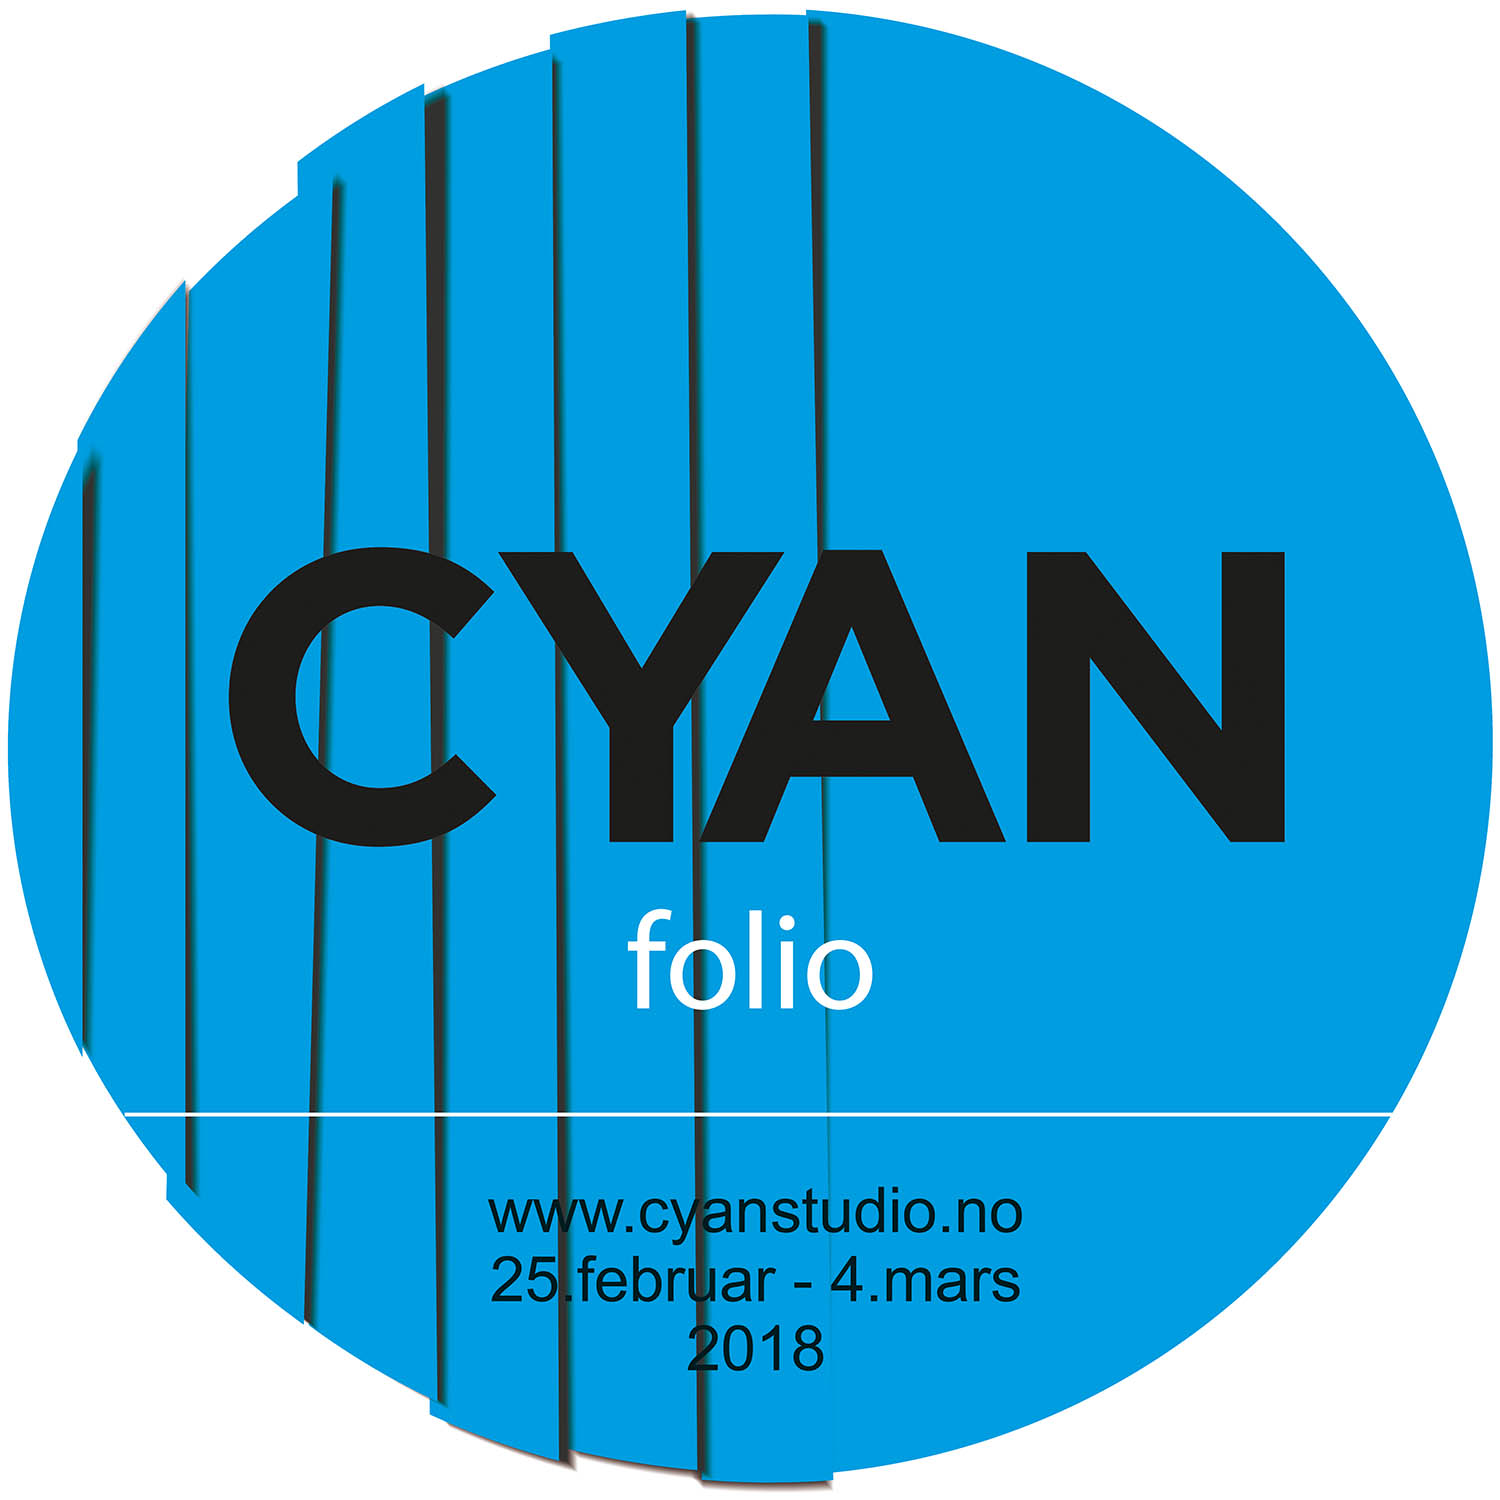 CYANlogoFOLIO-logoweb.jpg